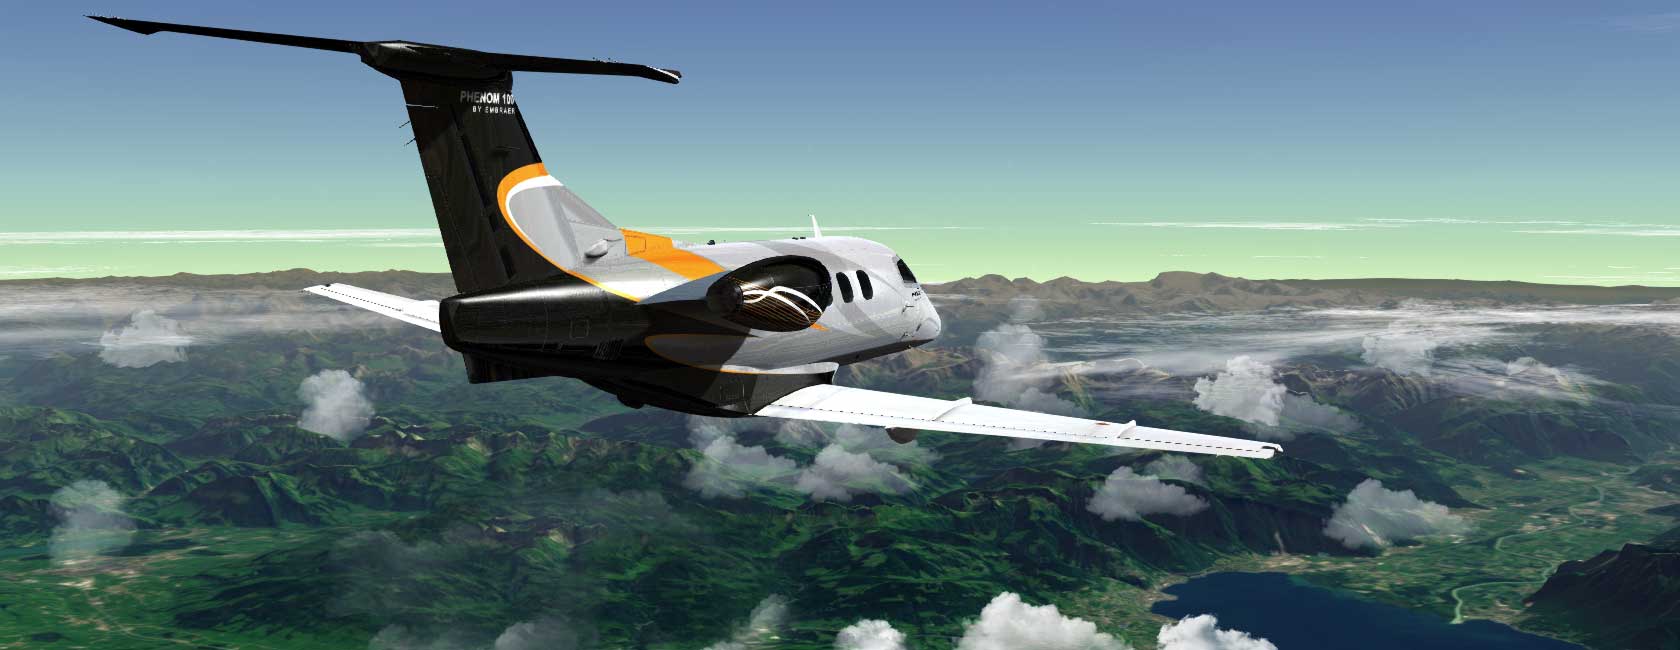 Gefs online free flight simulator aircraft downloads